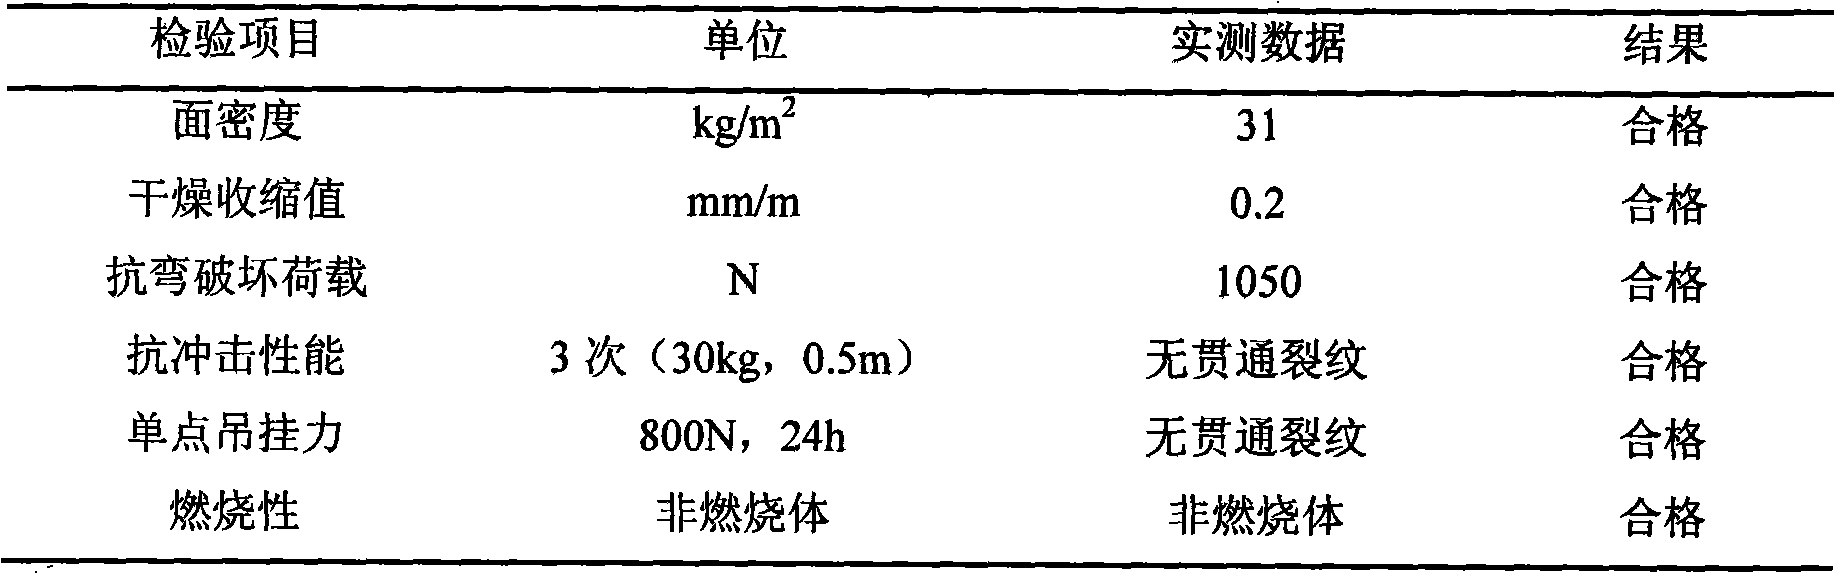 Fluorgypsum light-weight laminboard